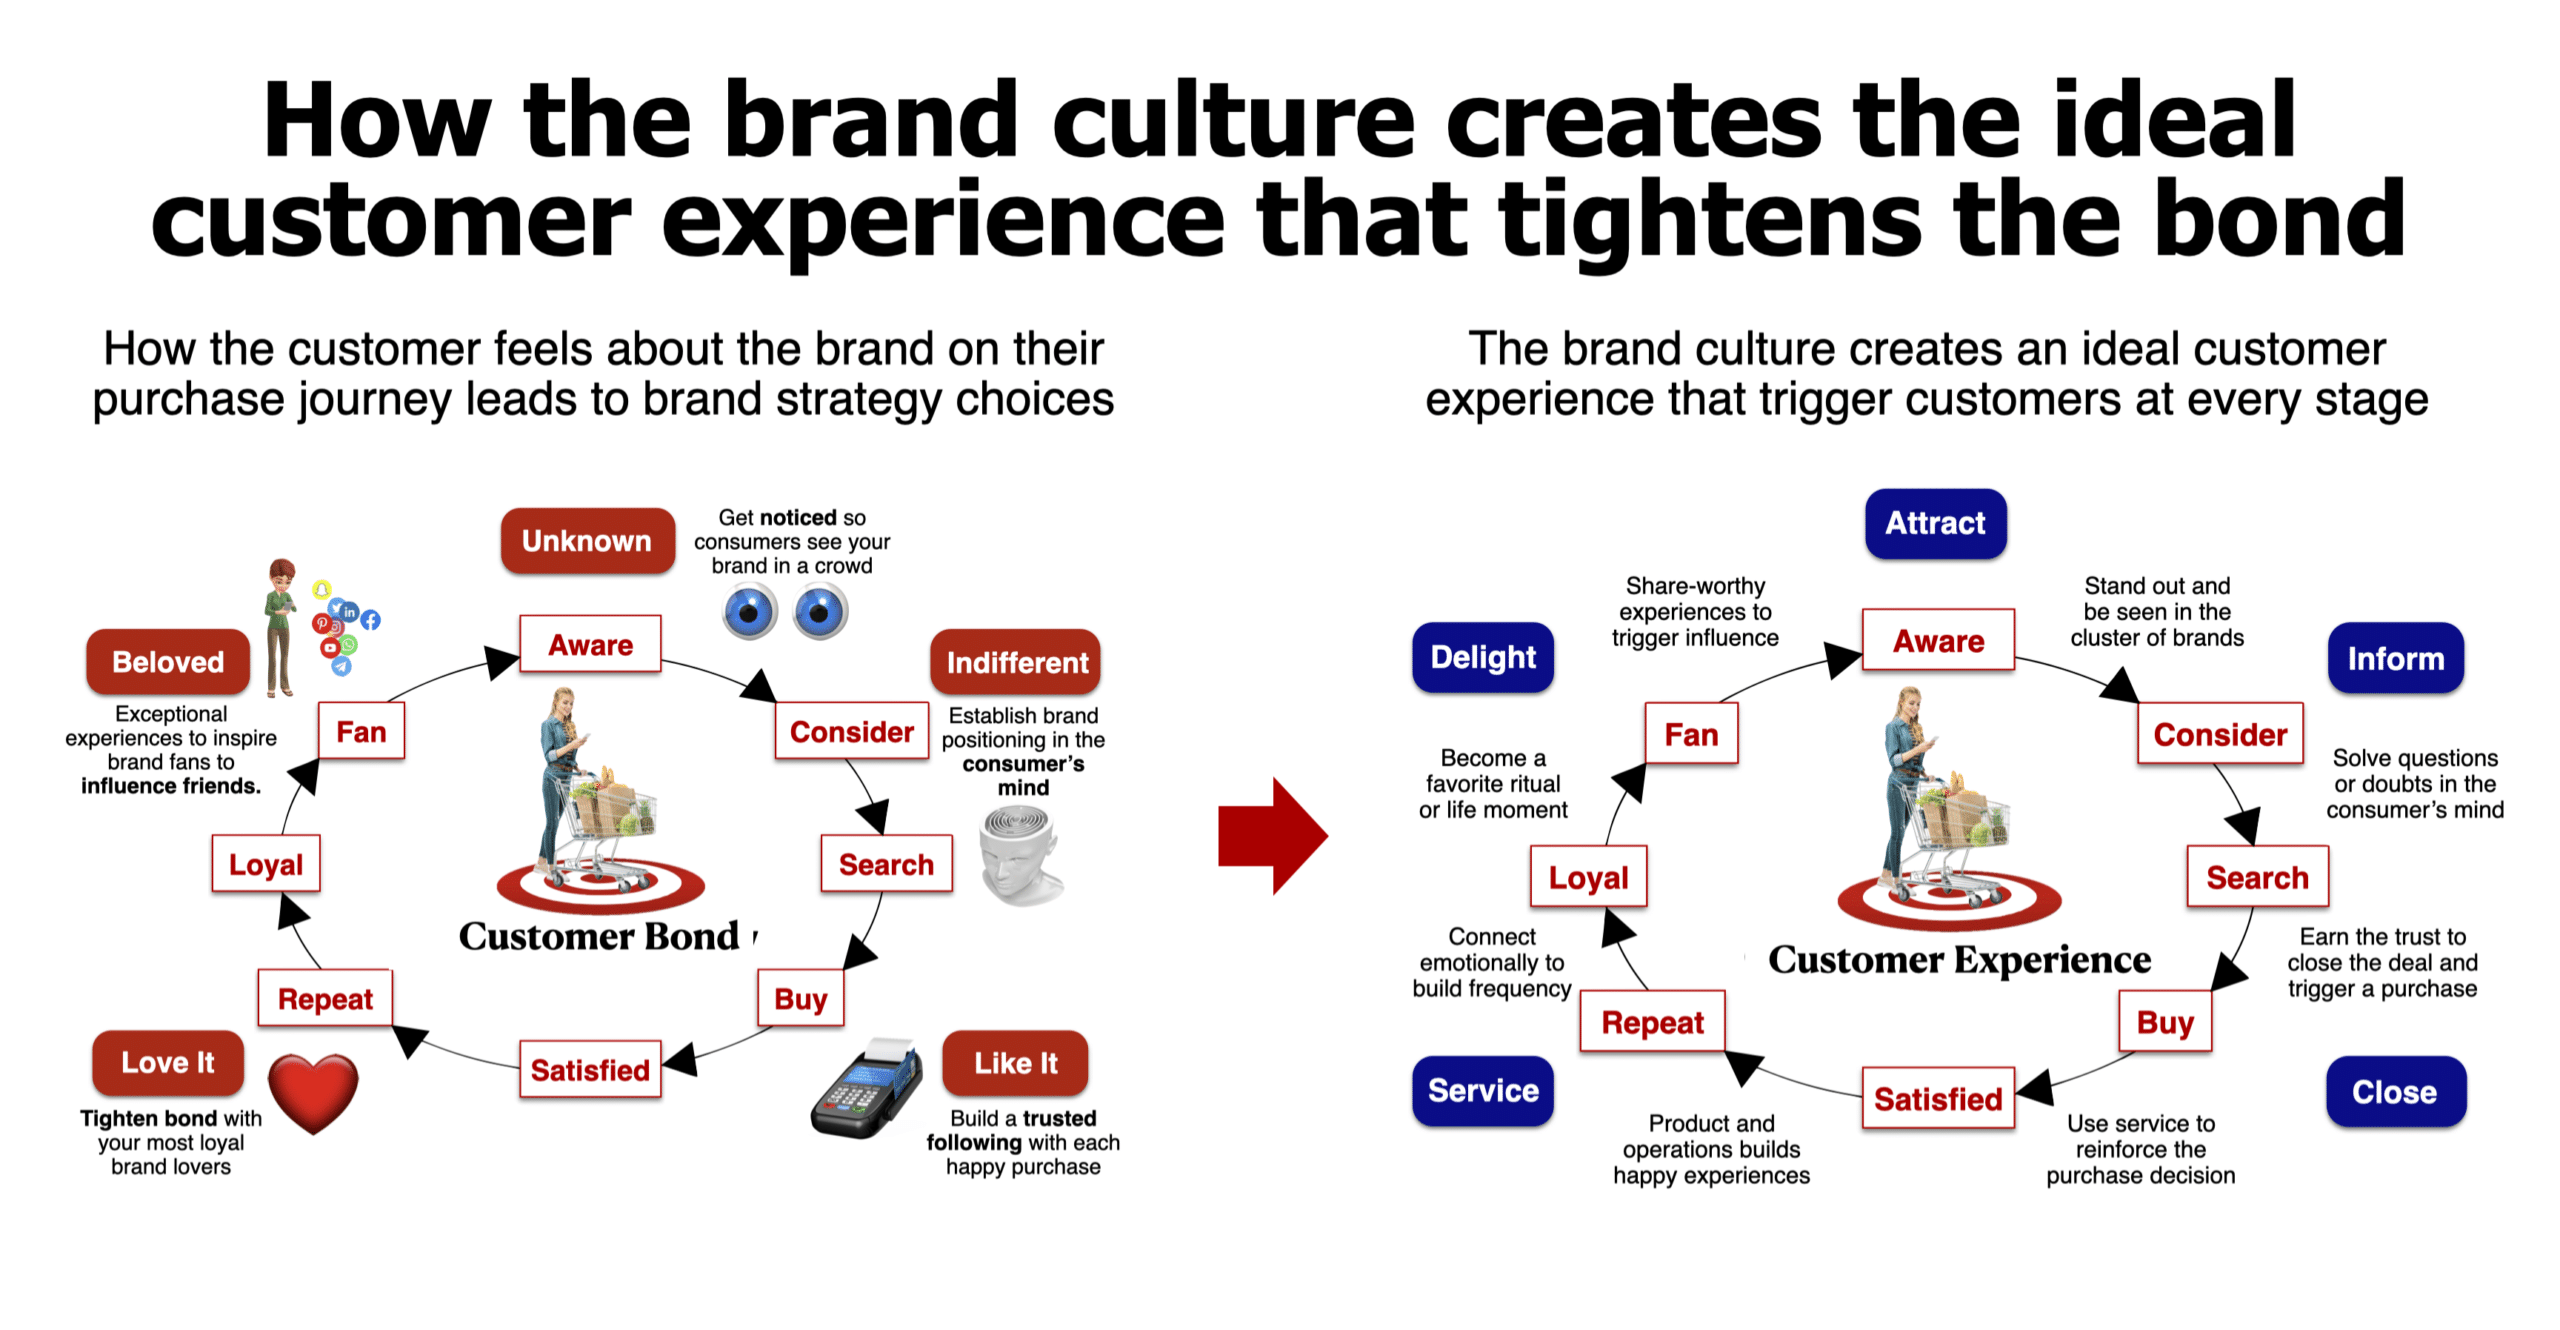 Brand Culture - Everyone creates the customer experience